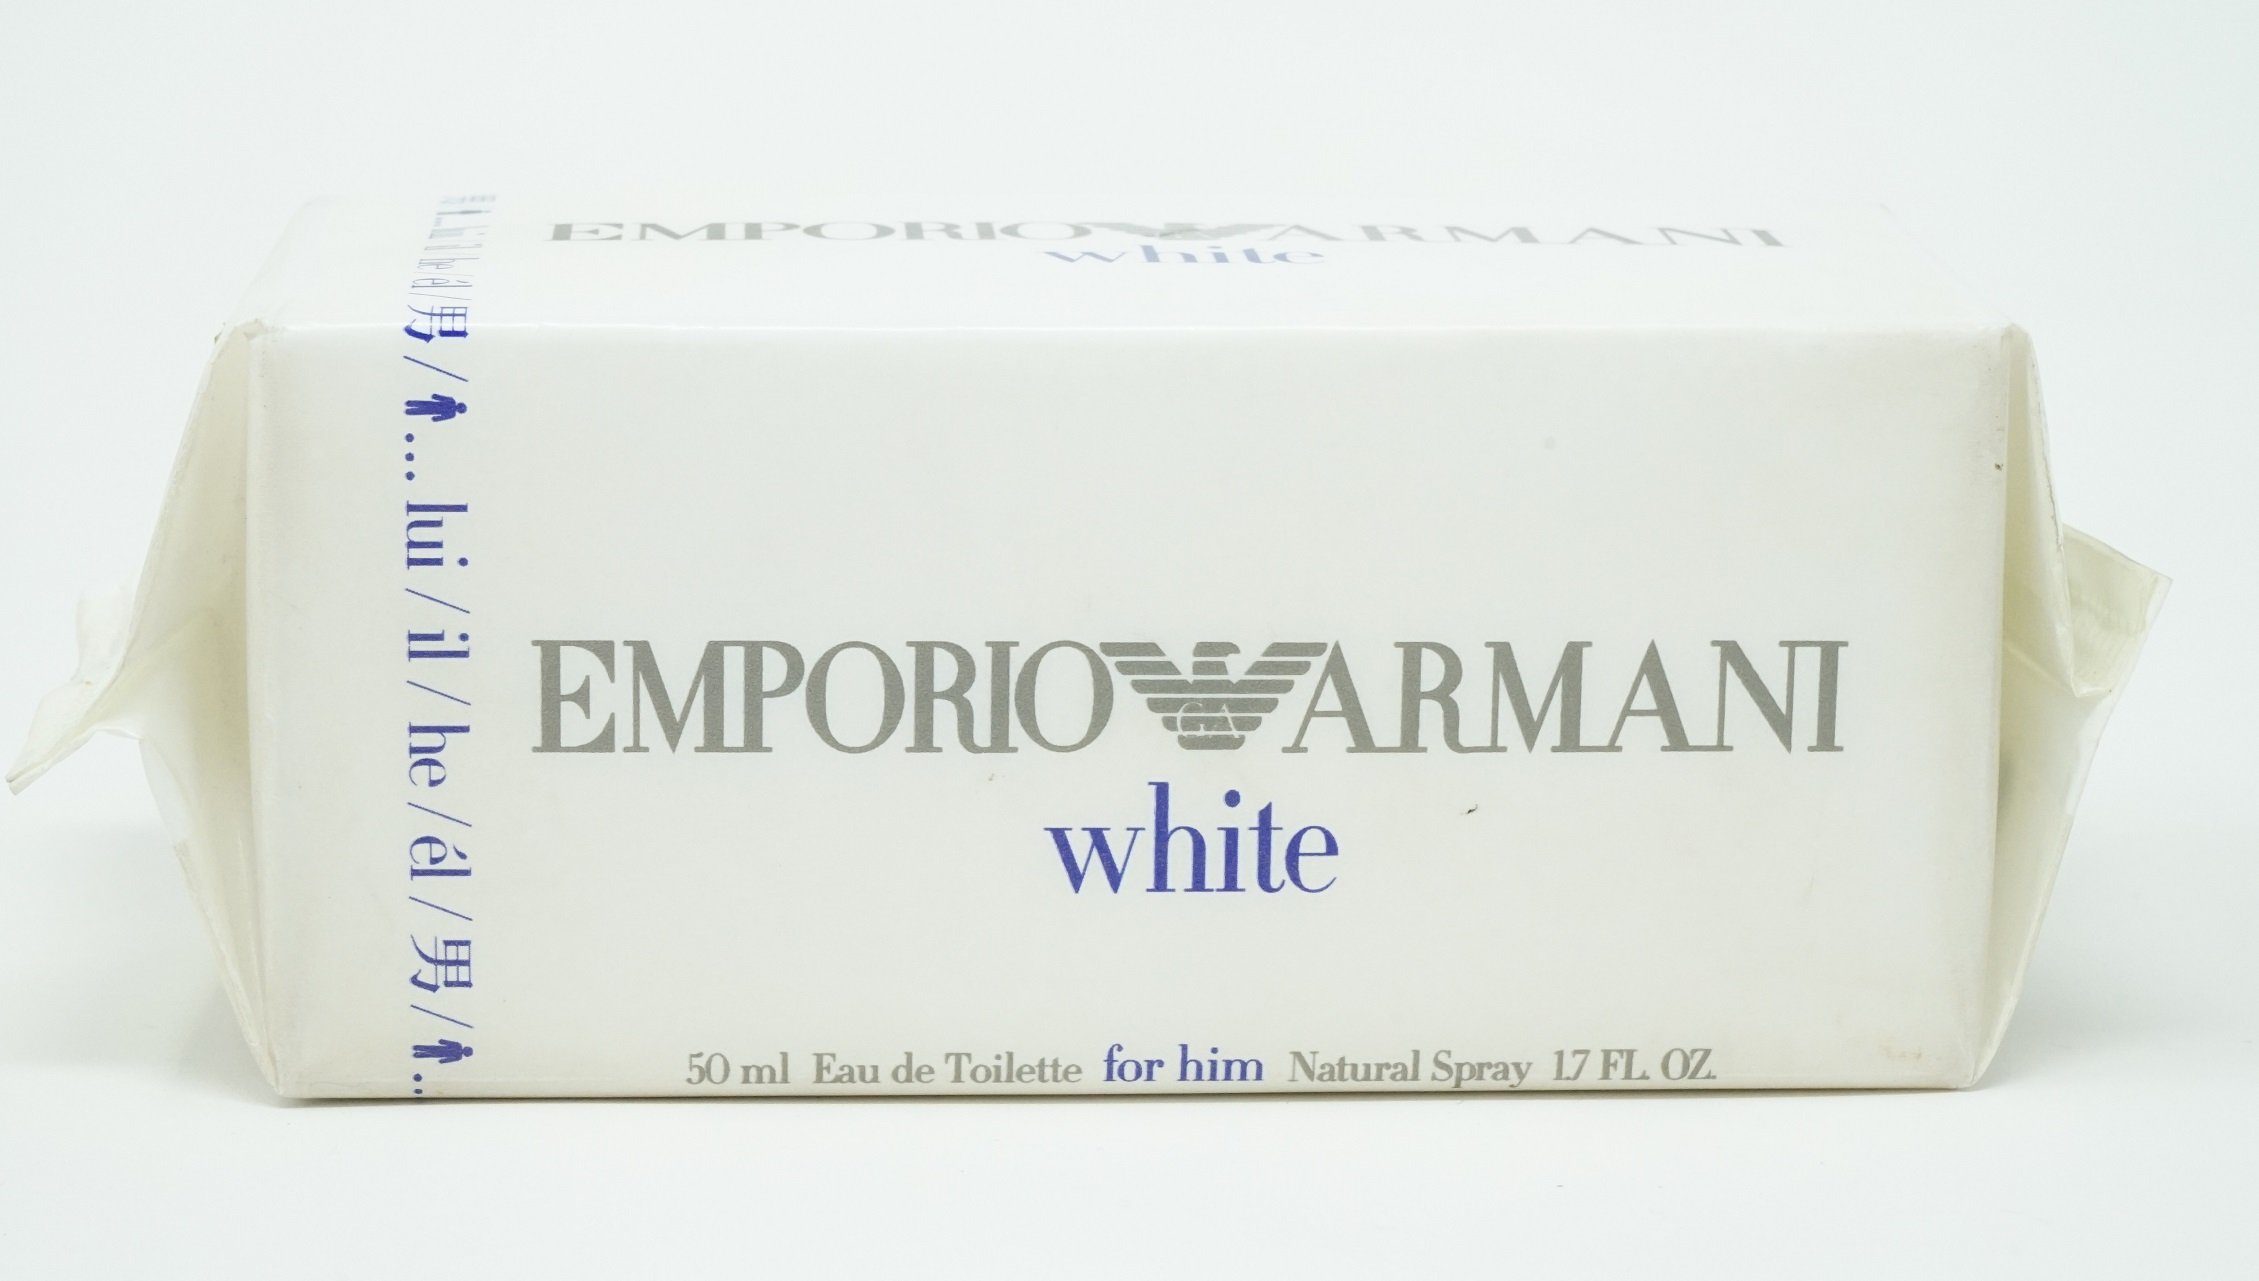 Emporio Armani Eau de Toilette Emporio Armani White for Him Eau de Toilette 50ml